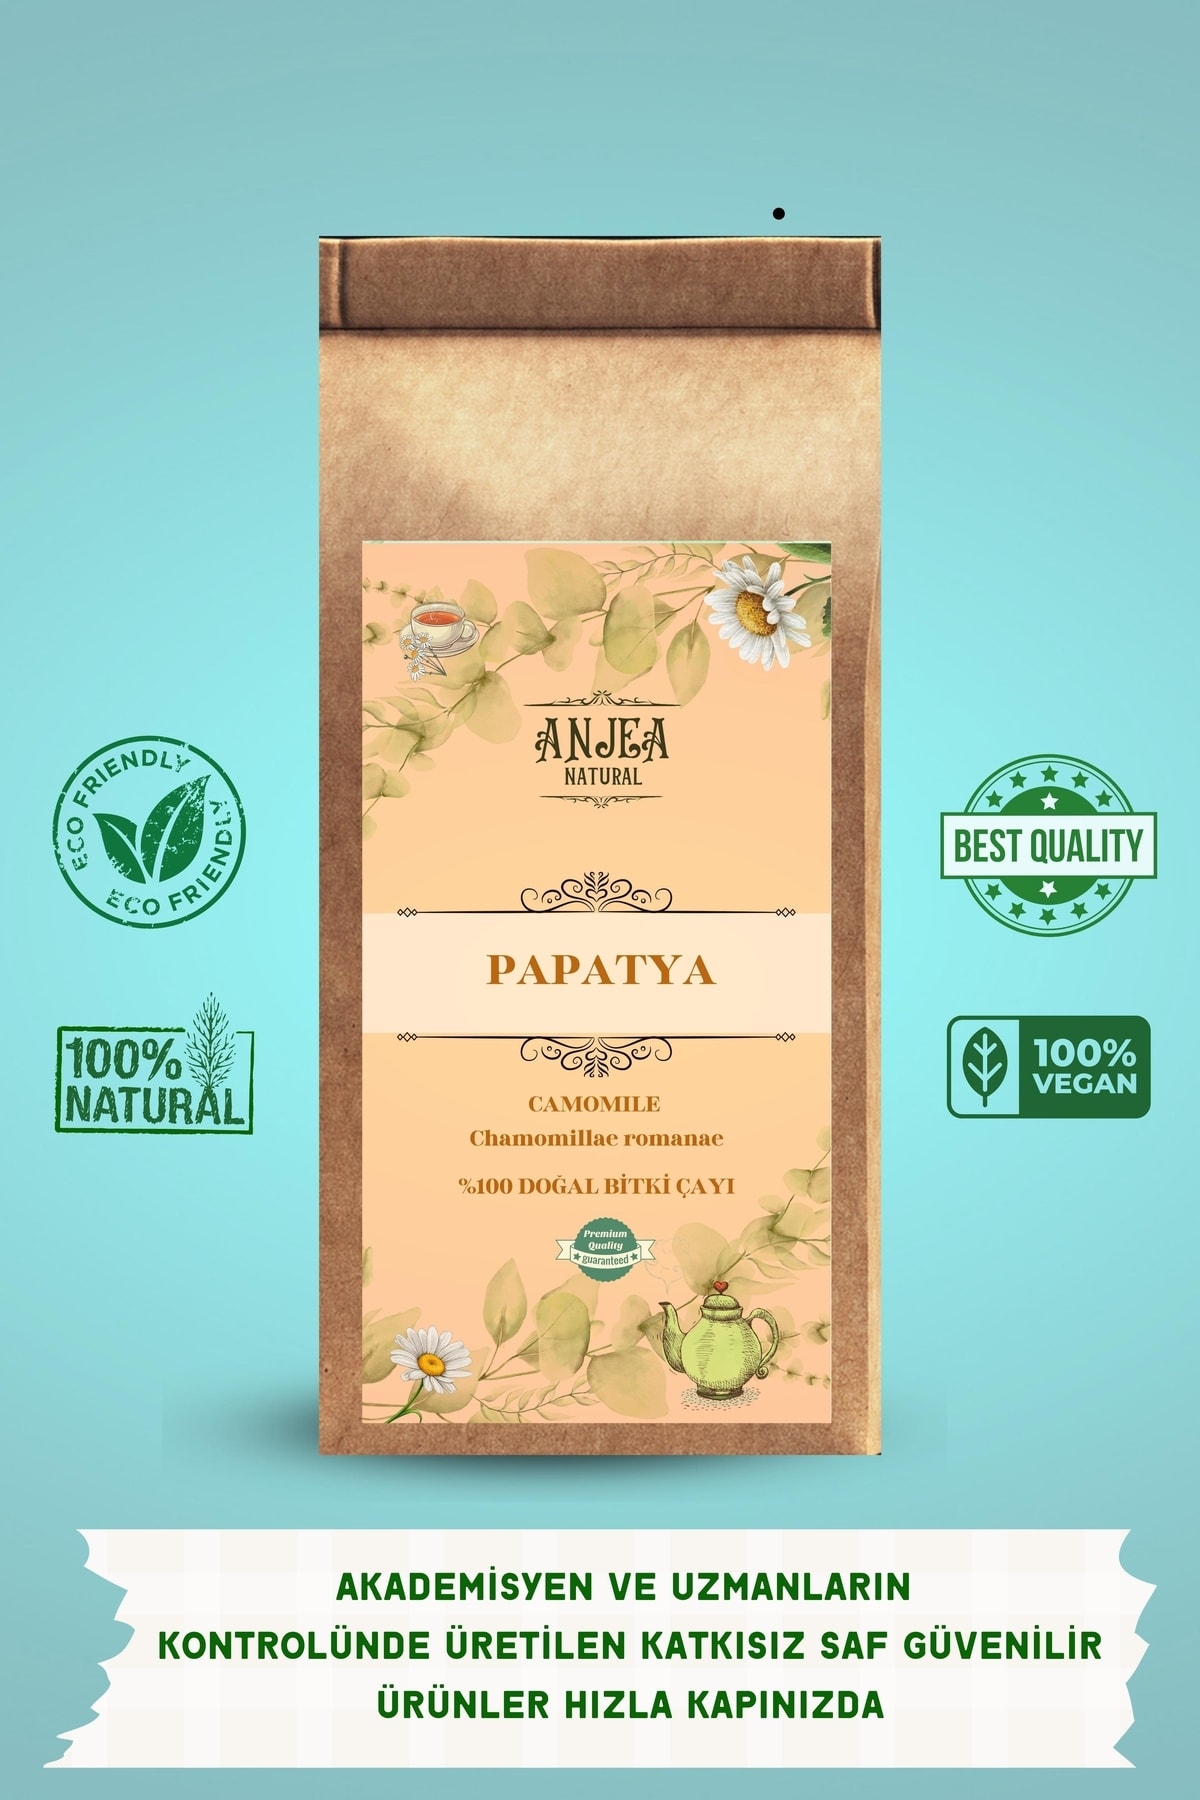 ANJEA Papatya Çayı - Doğal Bitki Çayı 100 gr / Chamomile Herbal Tea 100% Natural